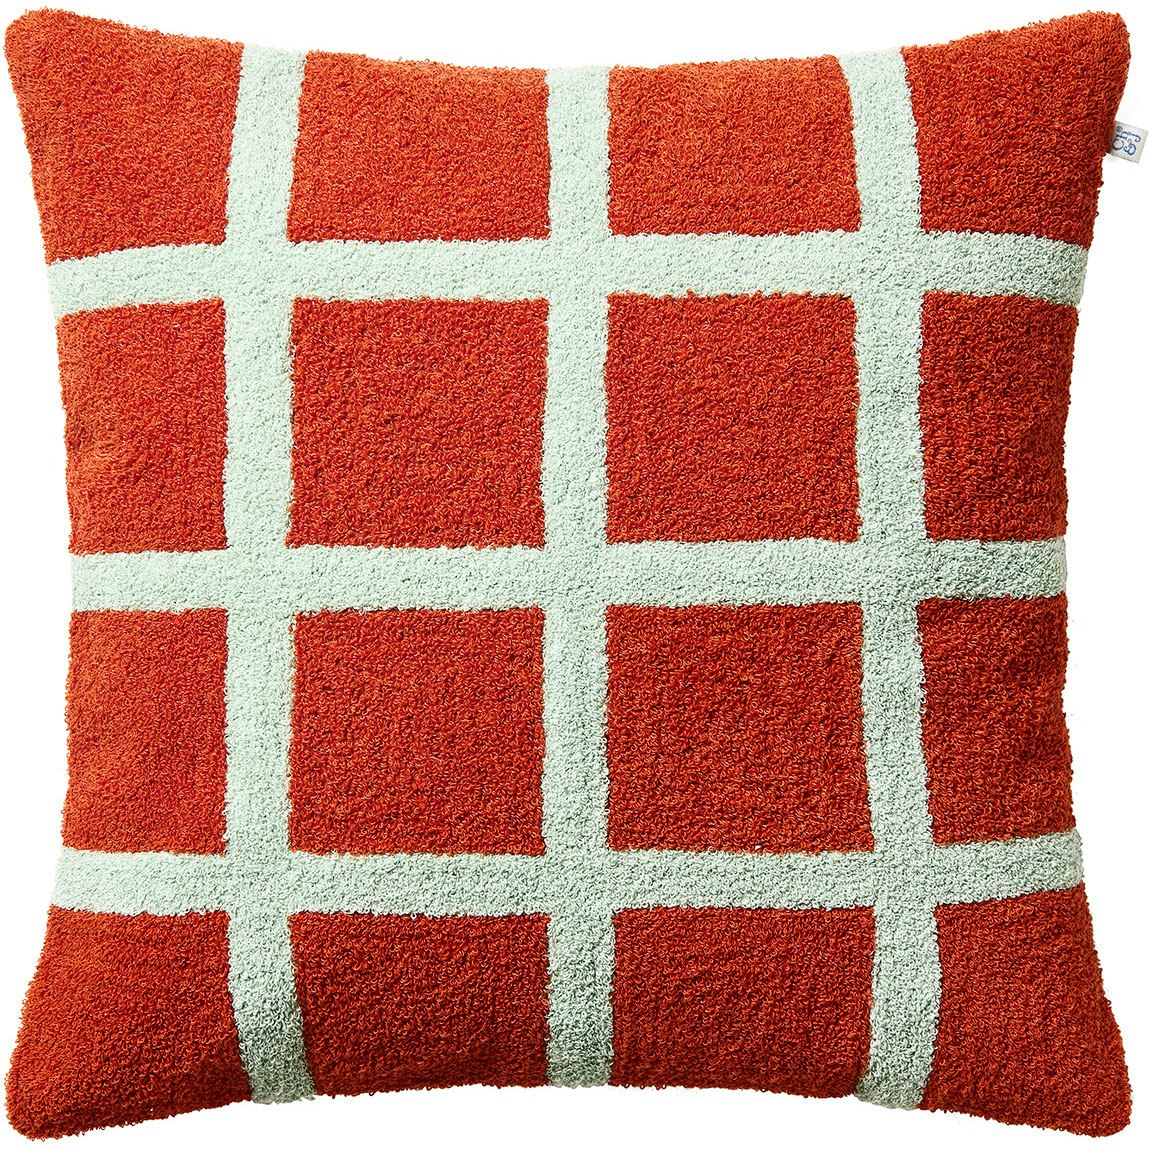 Check Cushion Cover 50x50 cm, Apricot Orange / Aqua